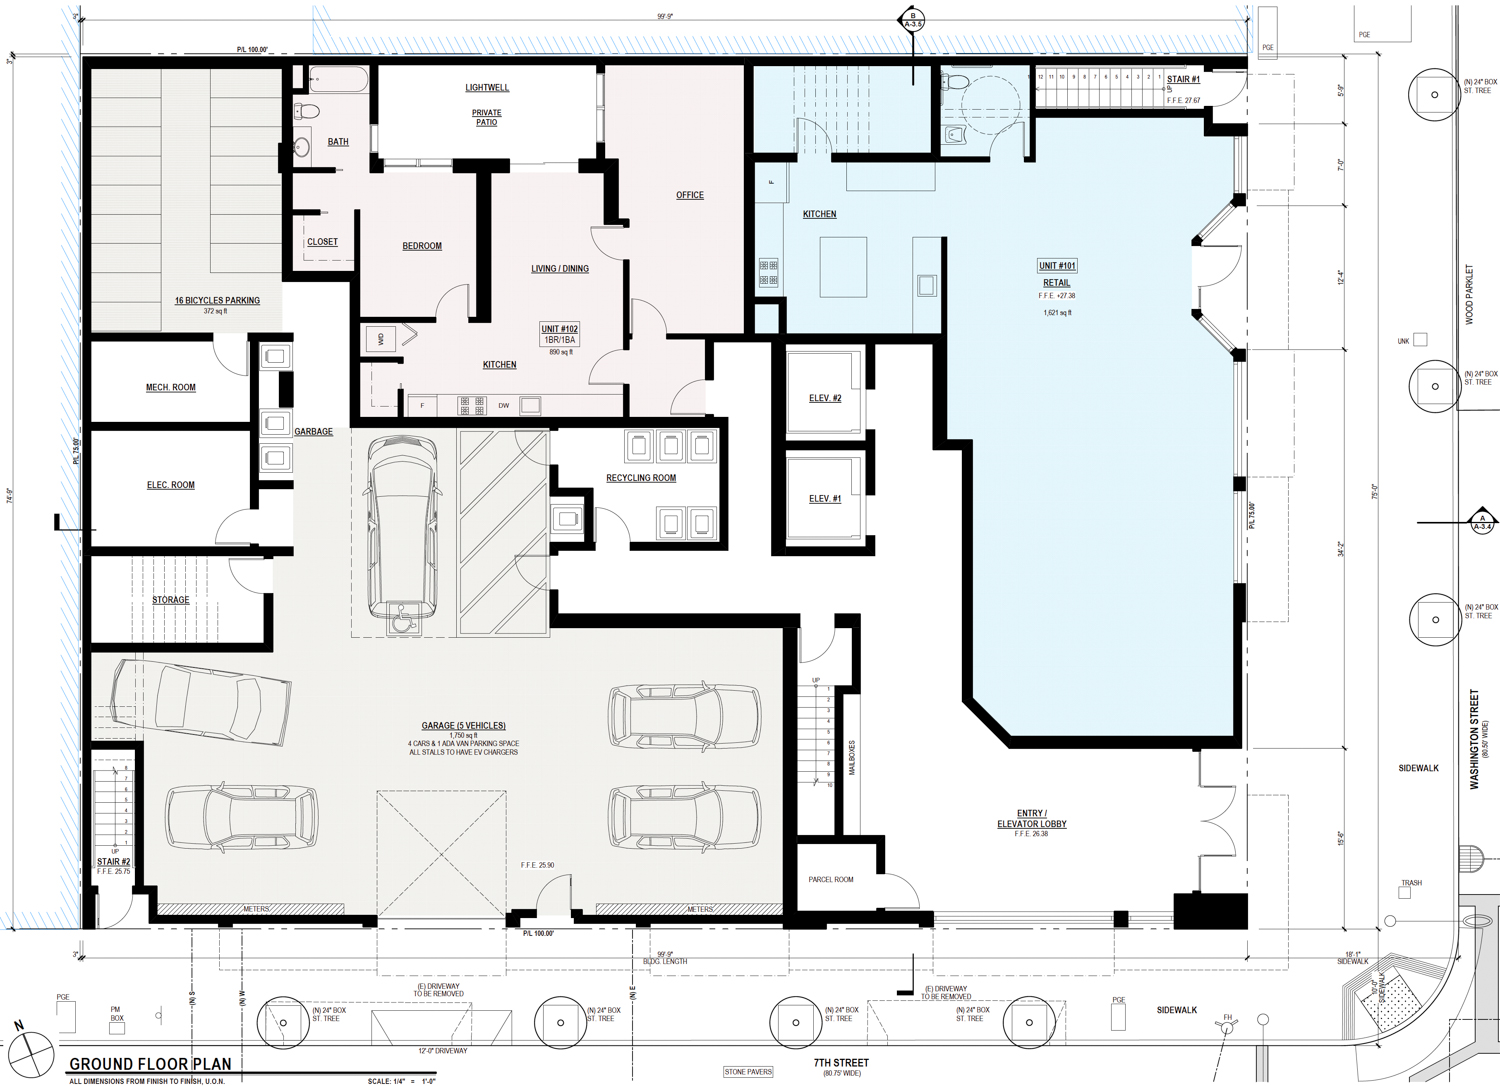 707 Washington Street ground level, floor plan by Schaub Li Architects